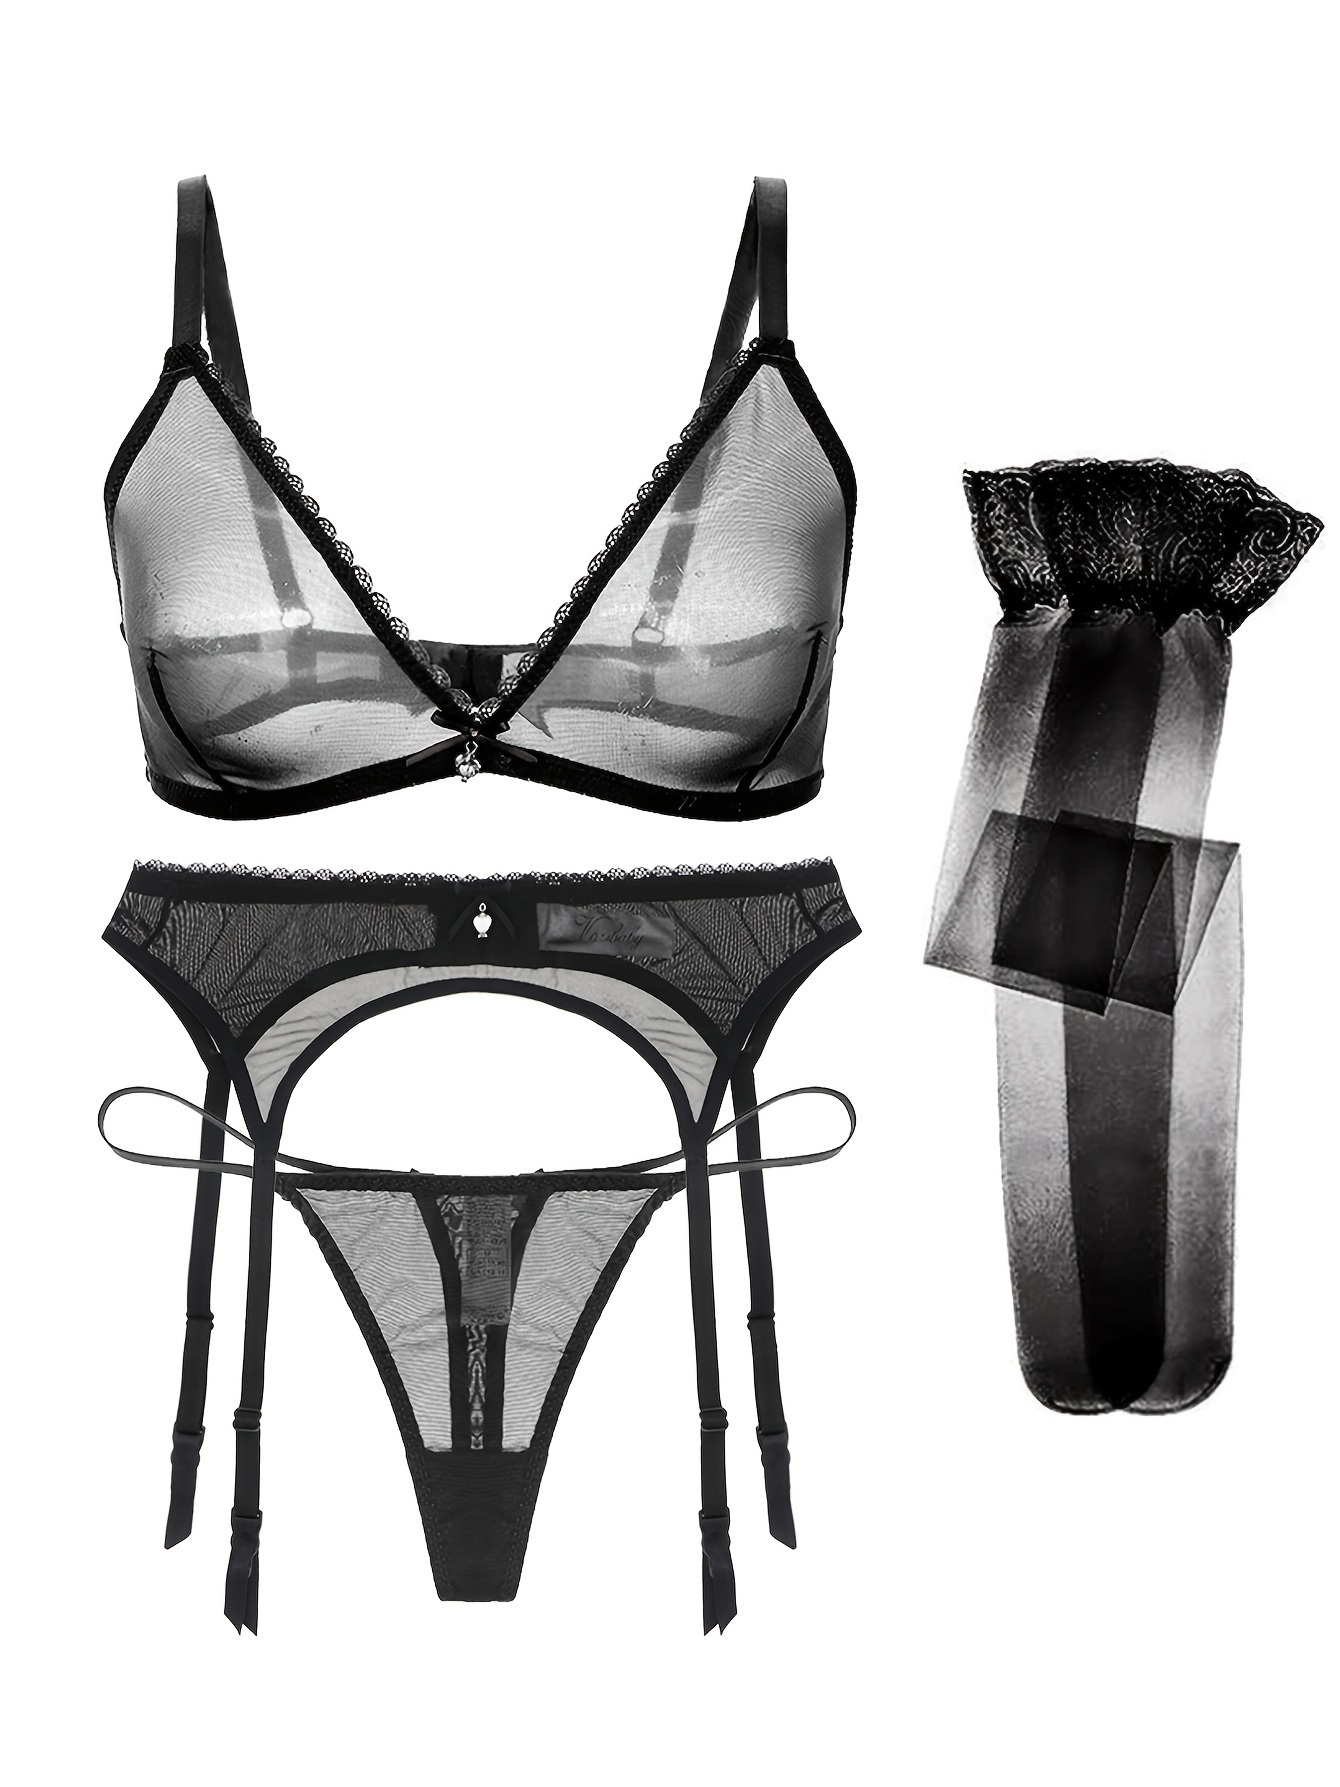 Women's Underwear Lace Half Cup Bra+Panties+Garter+Stockings 5pcs/set  Lingerie